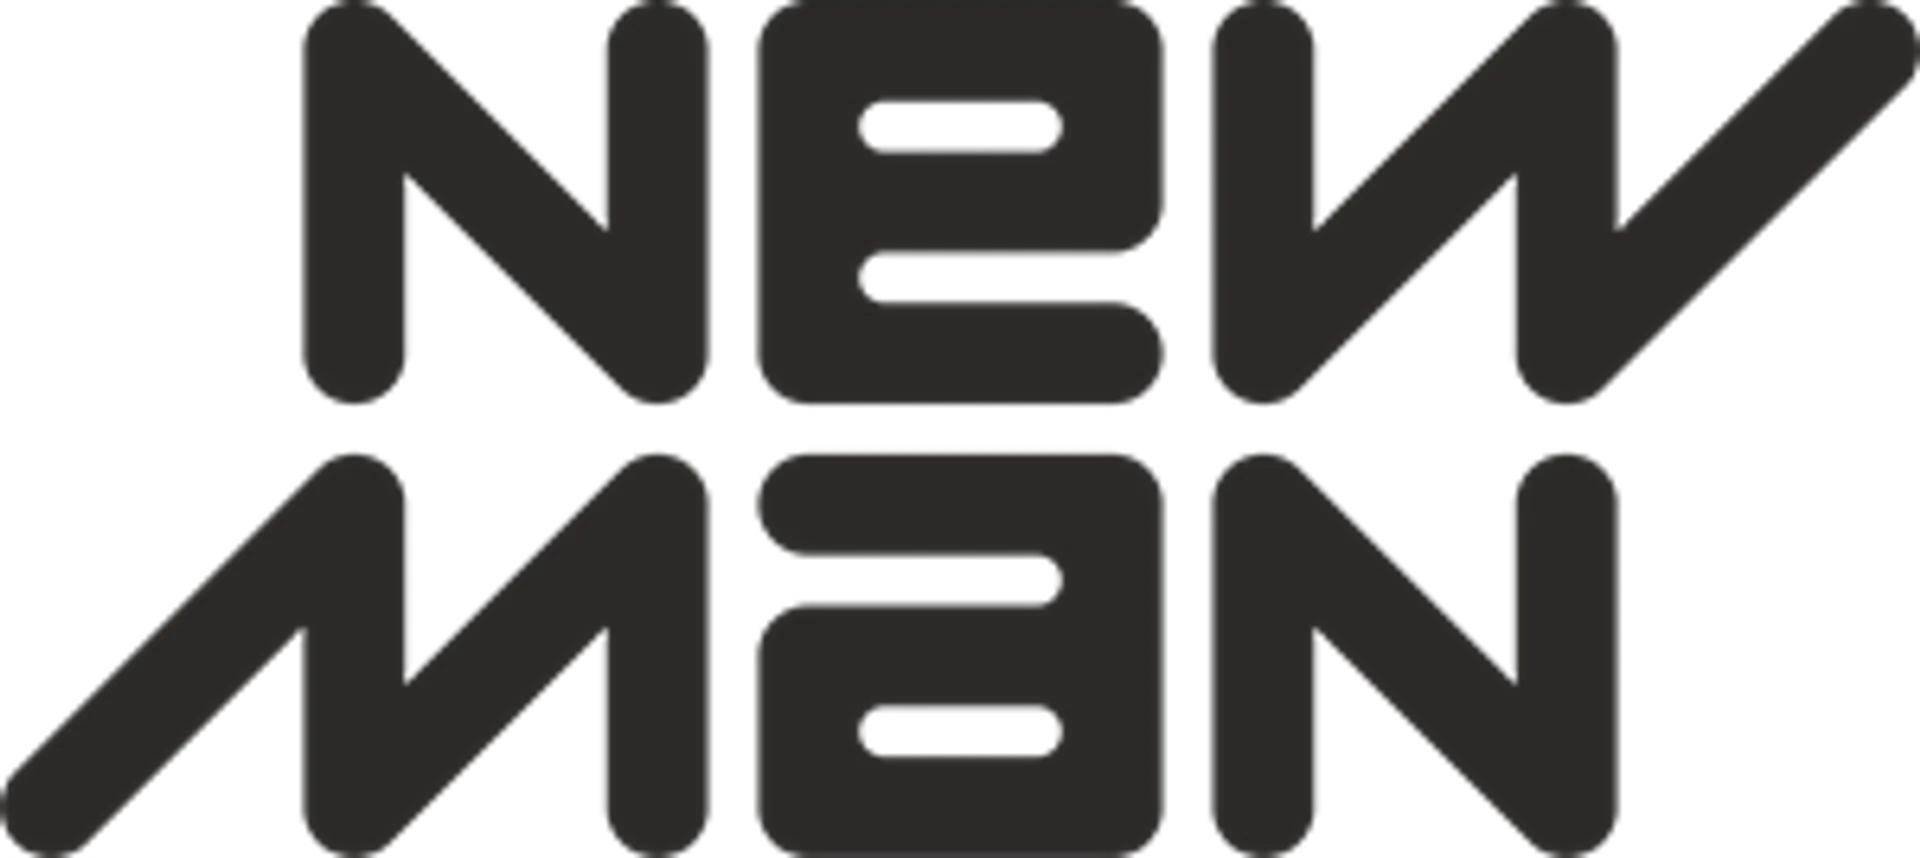 NEW MAN logo